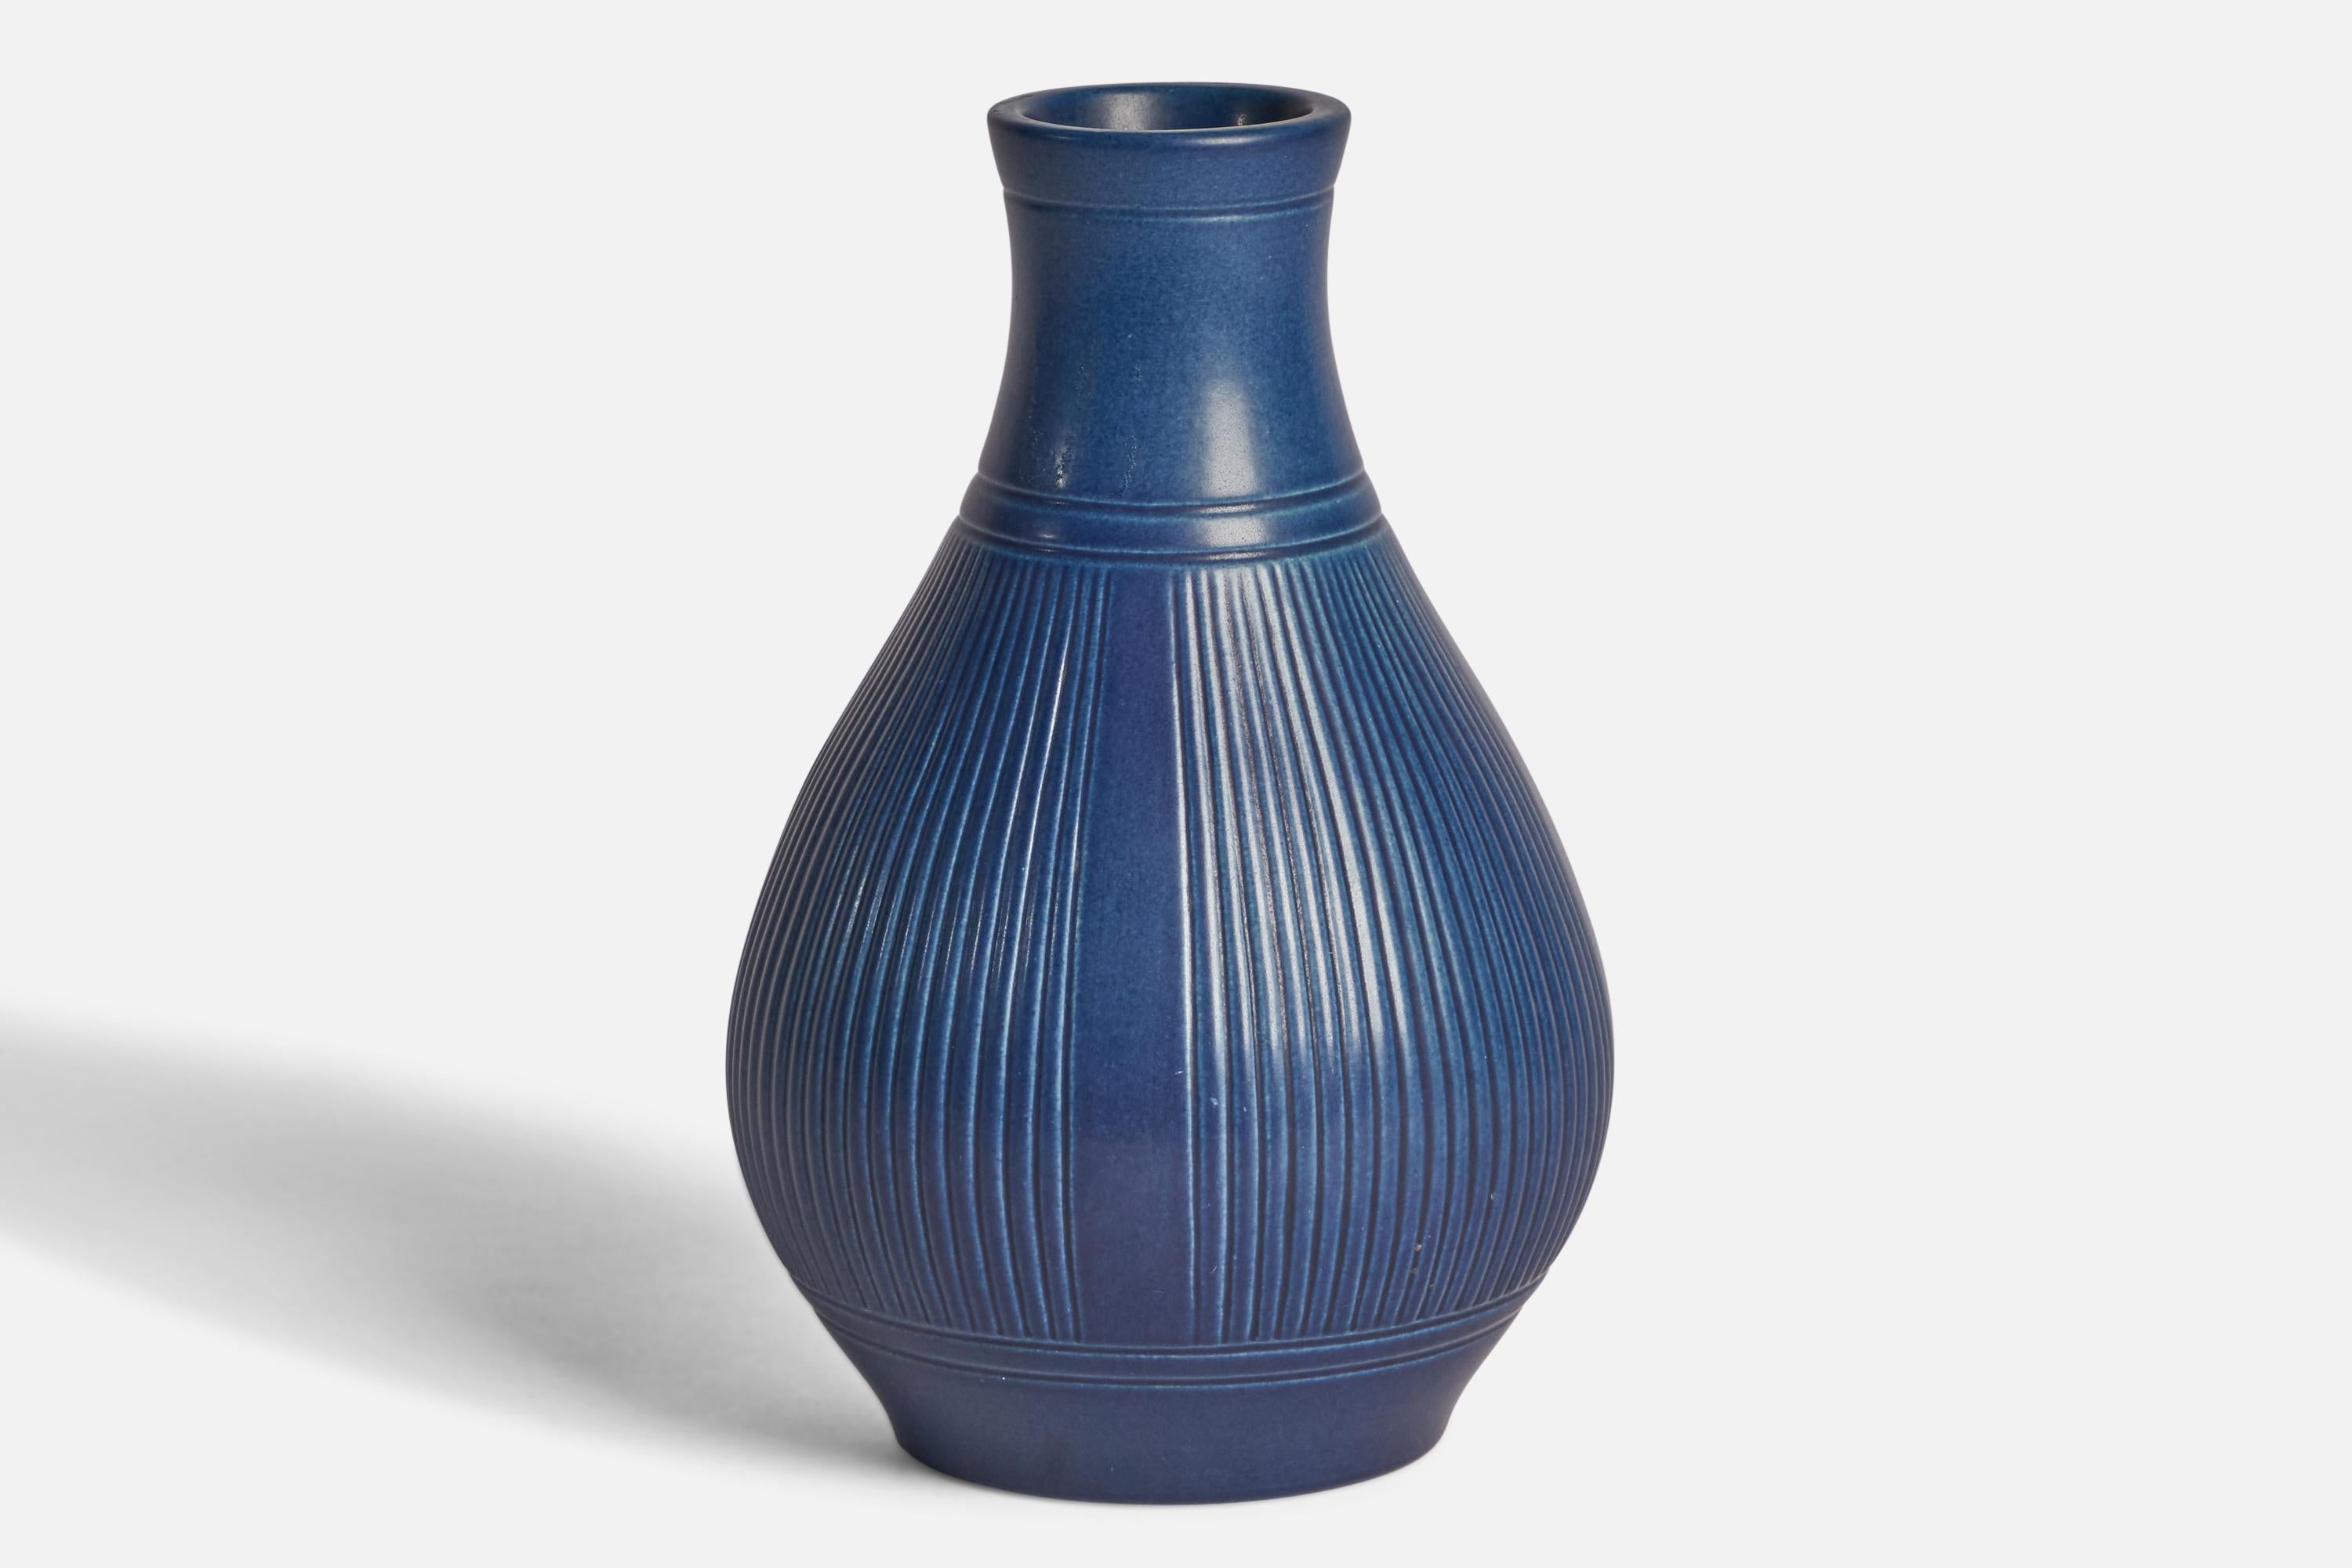 A blue-glazed incised stoneware vase designed and produced by Peter Ipsens Enke, Denmark, 1940s.